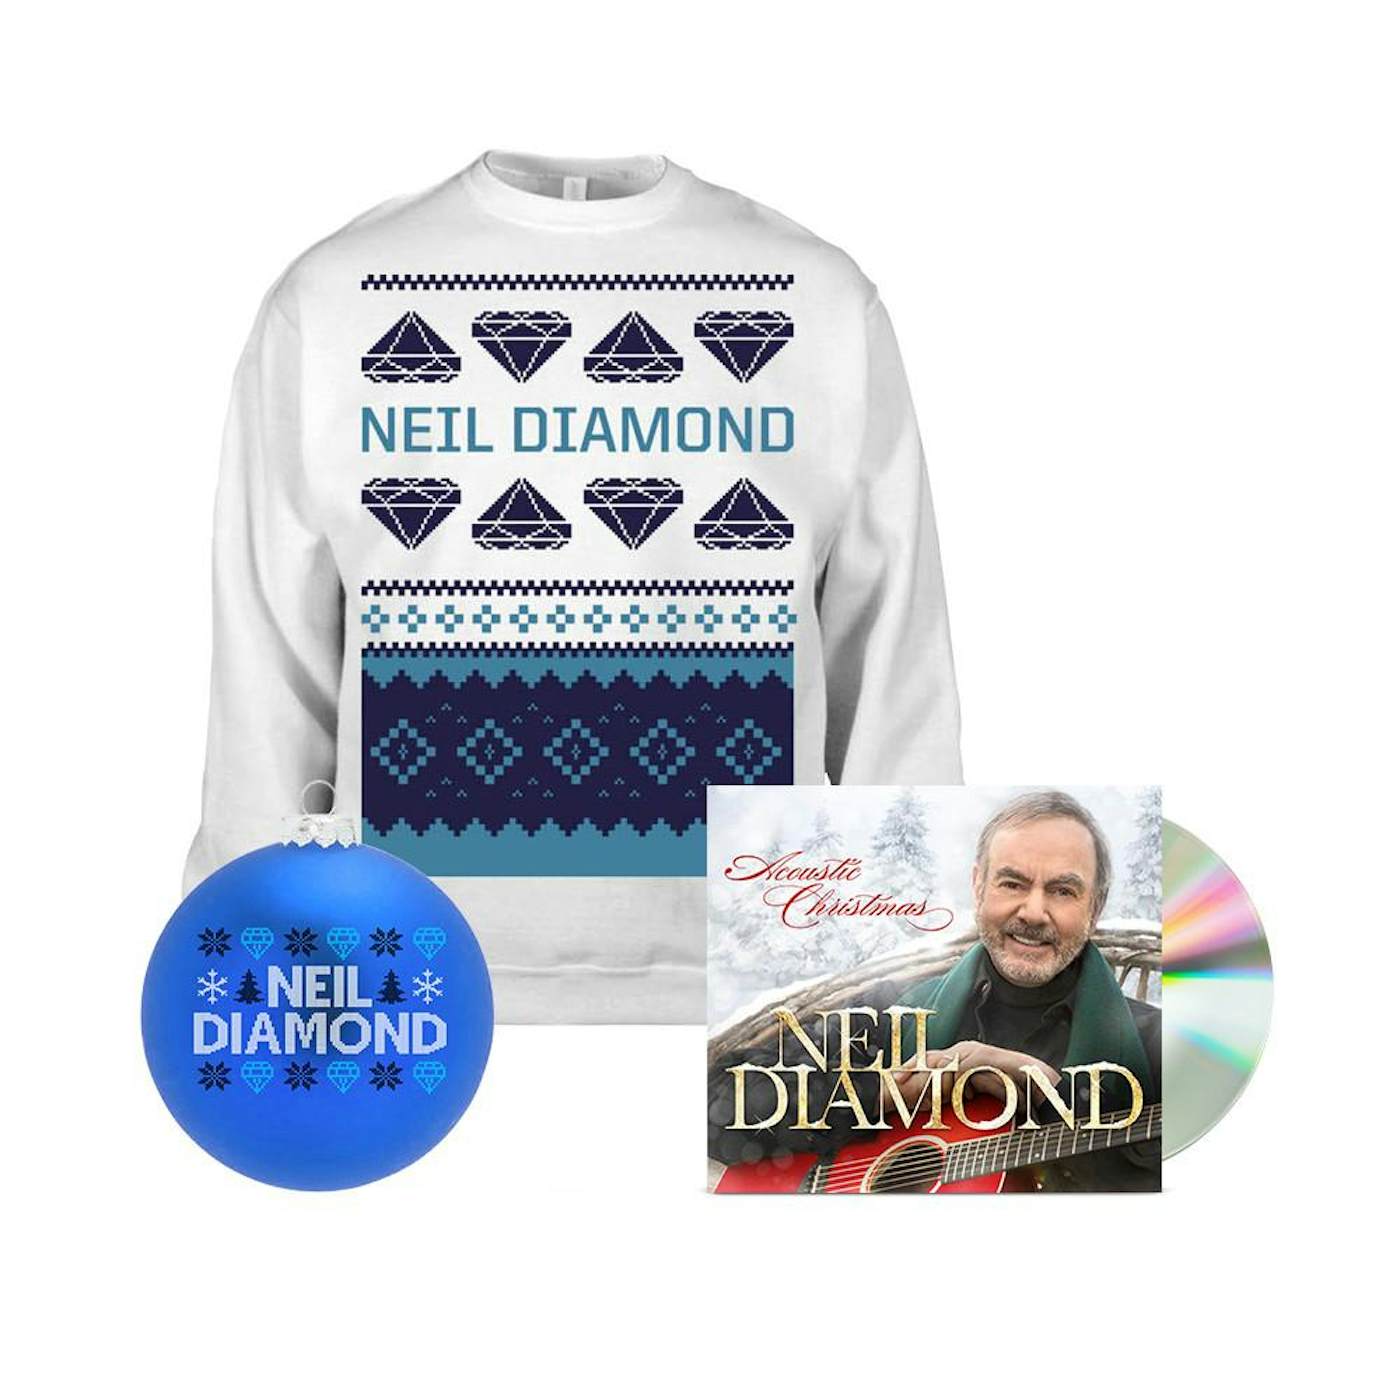 Neil Diamond Holiday Sweatshirt + CD + Holiday Ornament